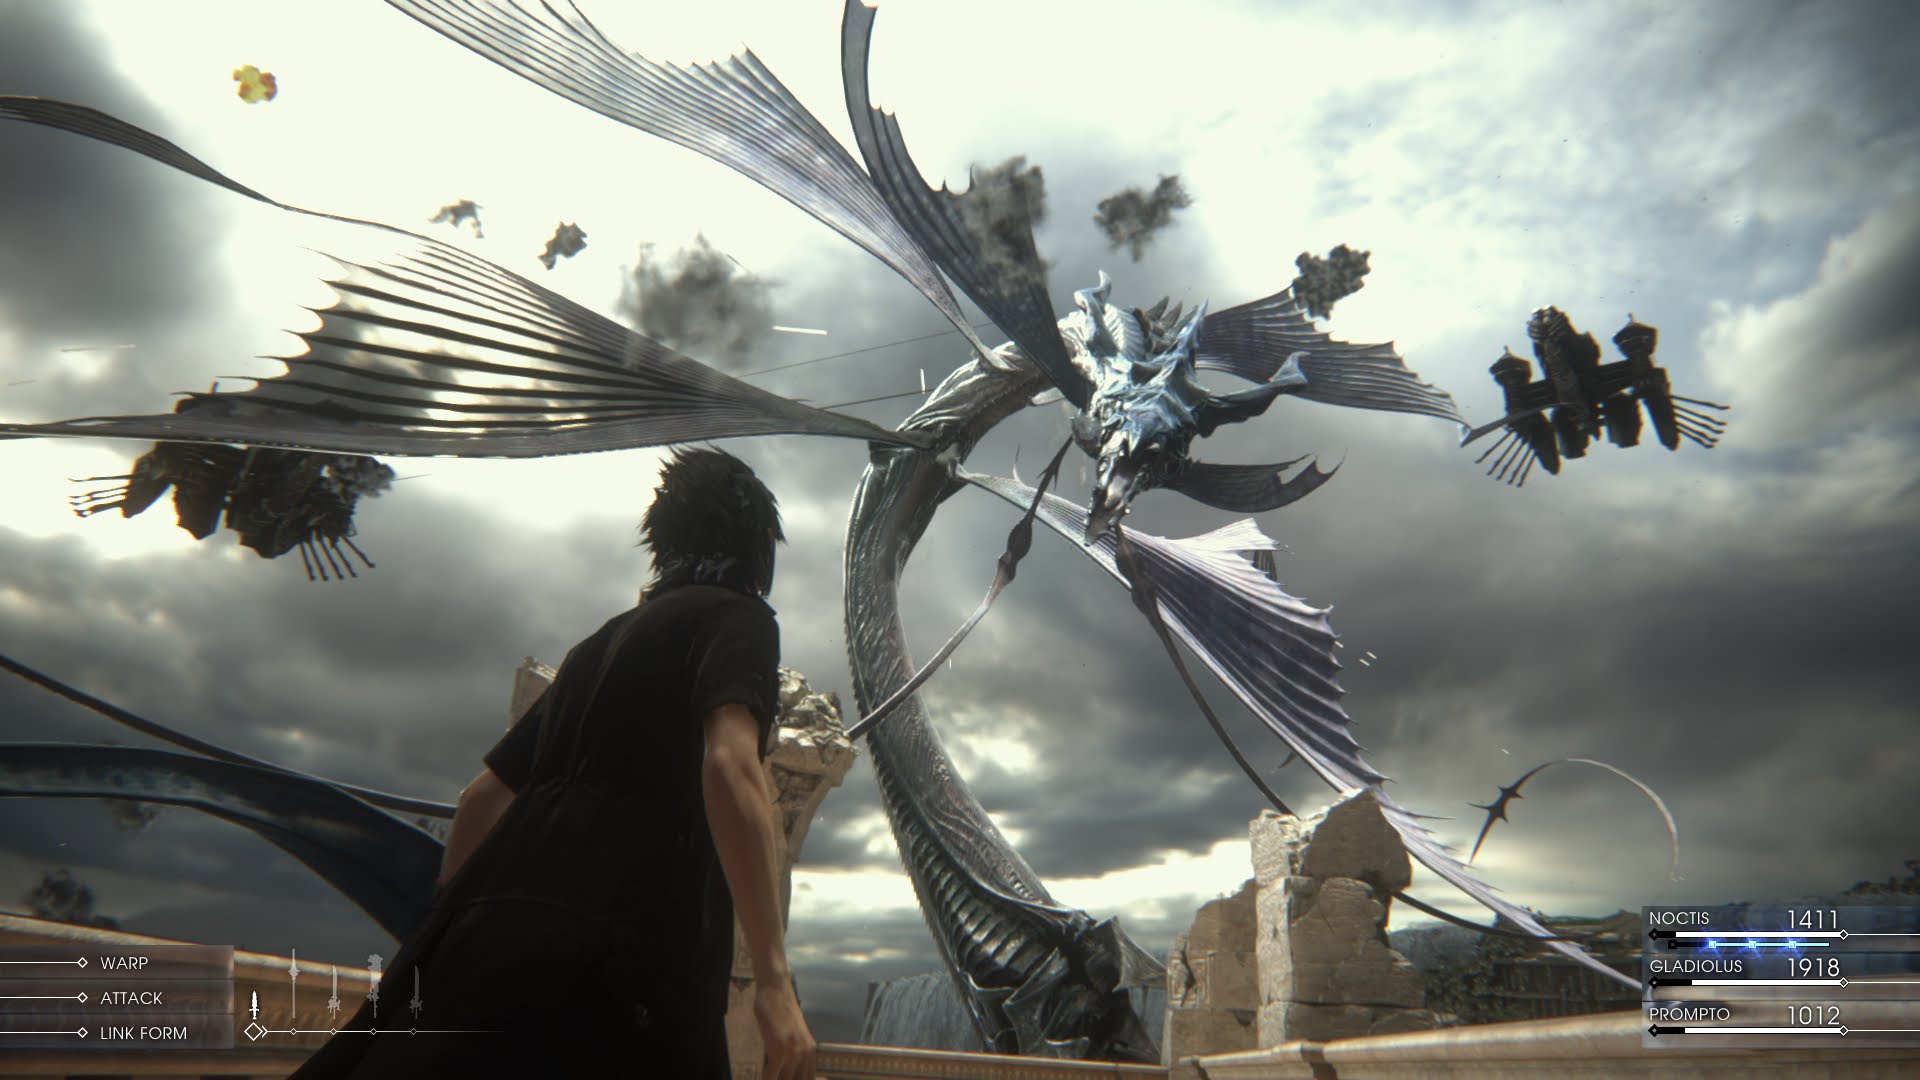 “FFXV” Director Describes “Final Fantasy Disease” - Says Everyone Has Their Own Vision of 